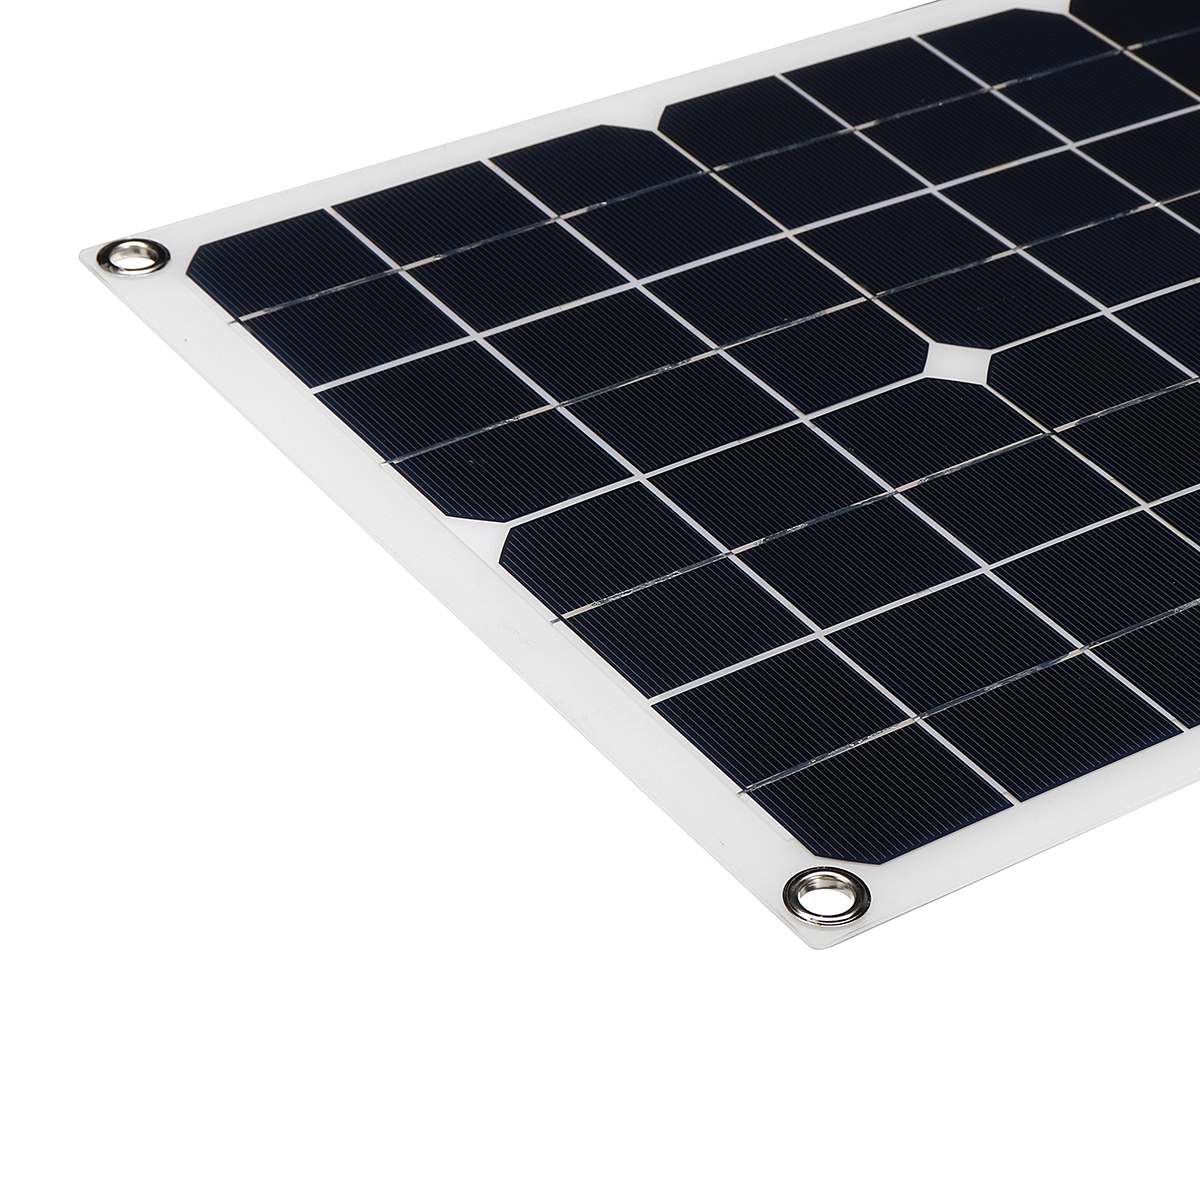 20W 430*280*2.5mm Monocrystalline Solar Panel with 18V DC Plug & 5V USB Output High Efficiency & Light Weight 15